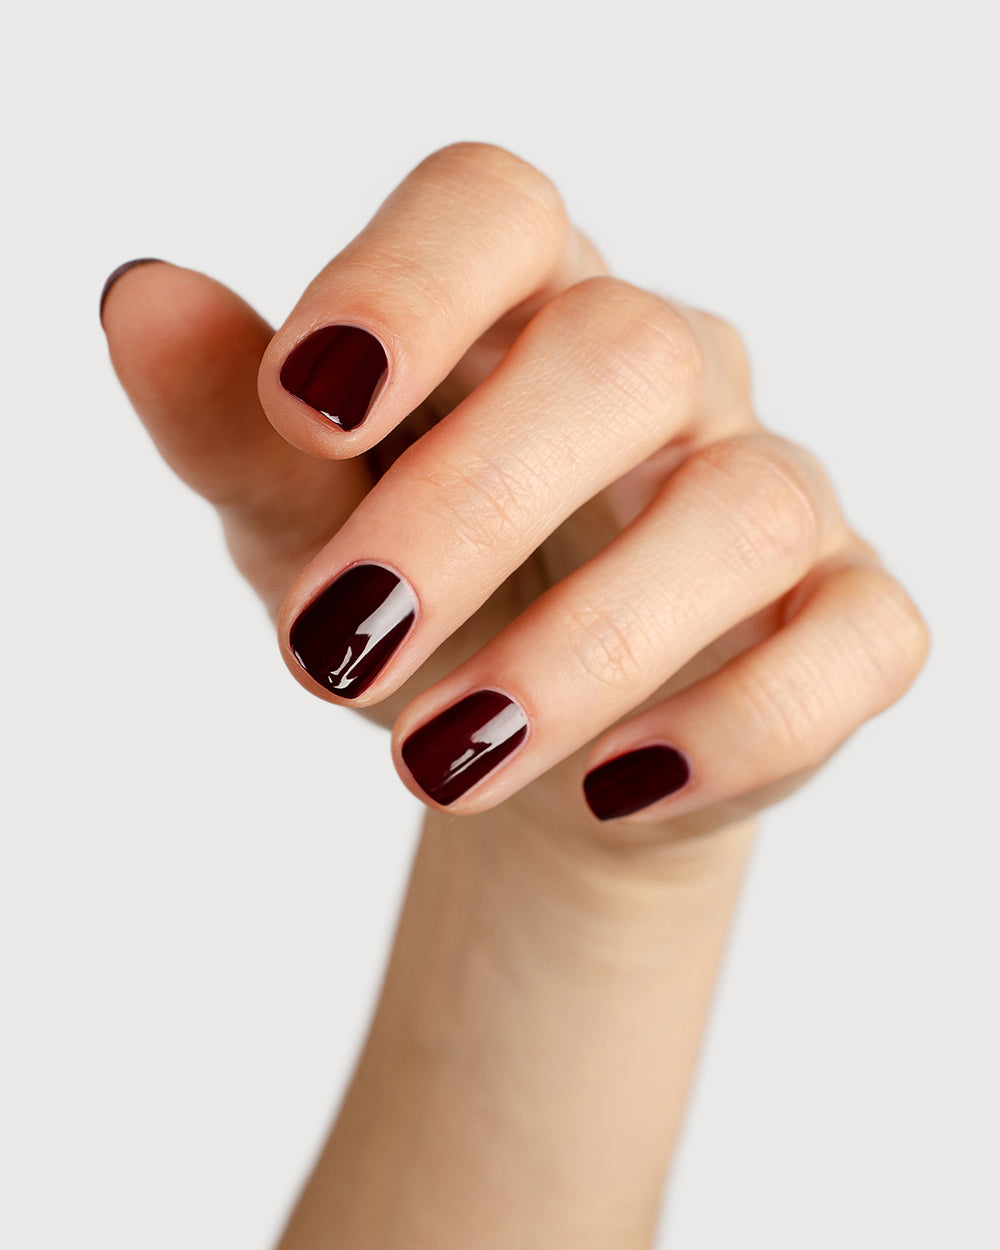 dark red nail polish hand swatch on fair skin tone